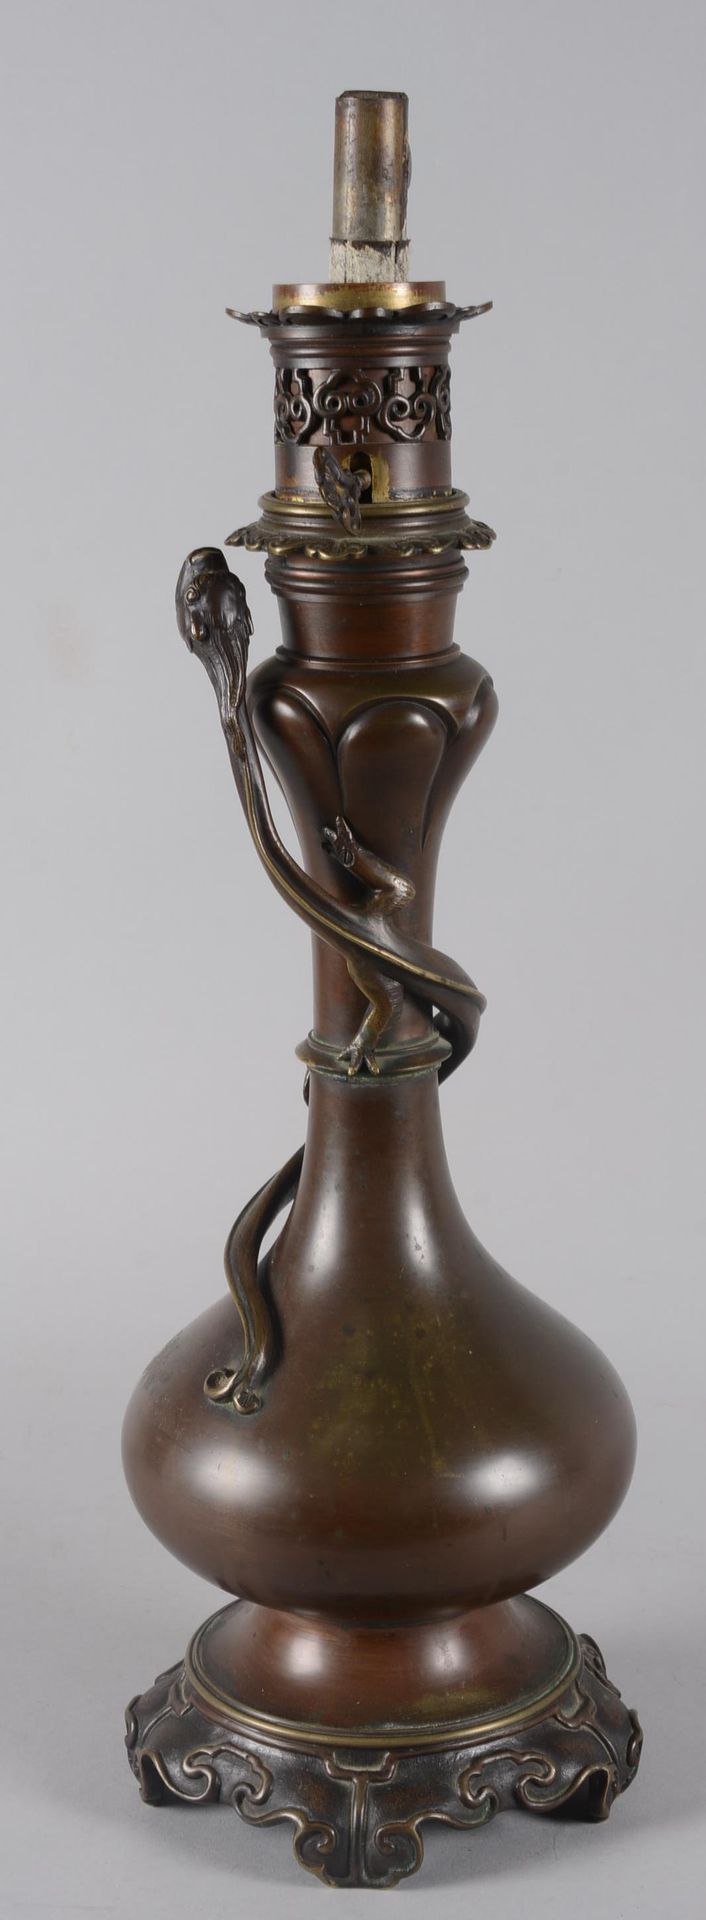 Lampe en bronze à décor d'un lézard JAPAN.

Bronzelampe mit Dekor einer Eidechse&hellip;